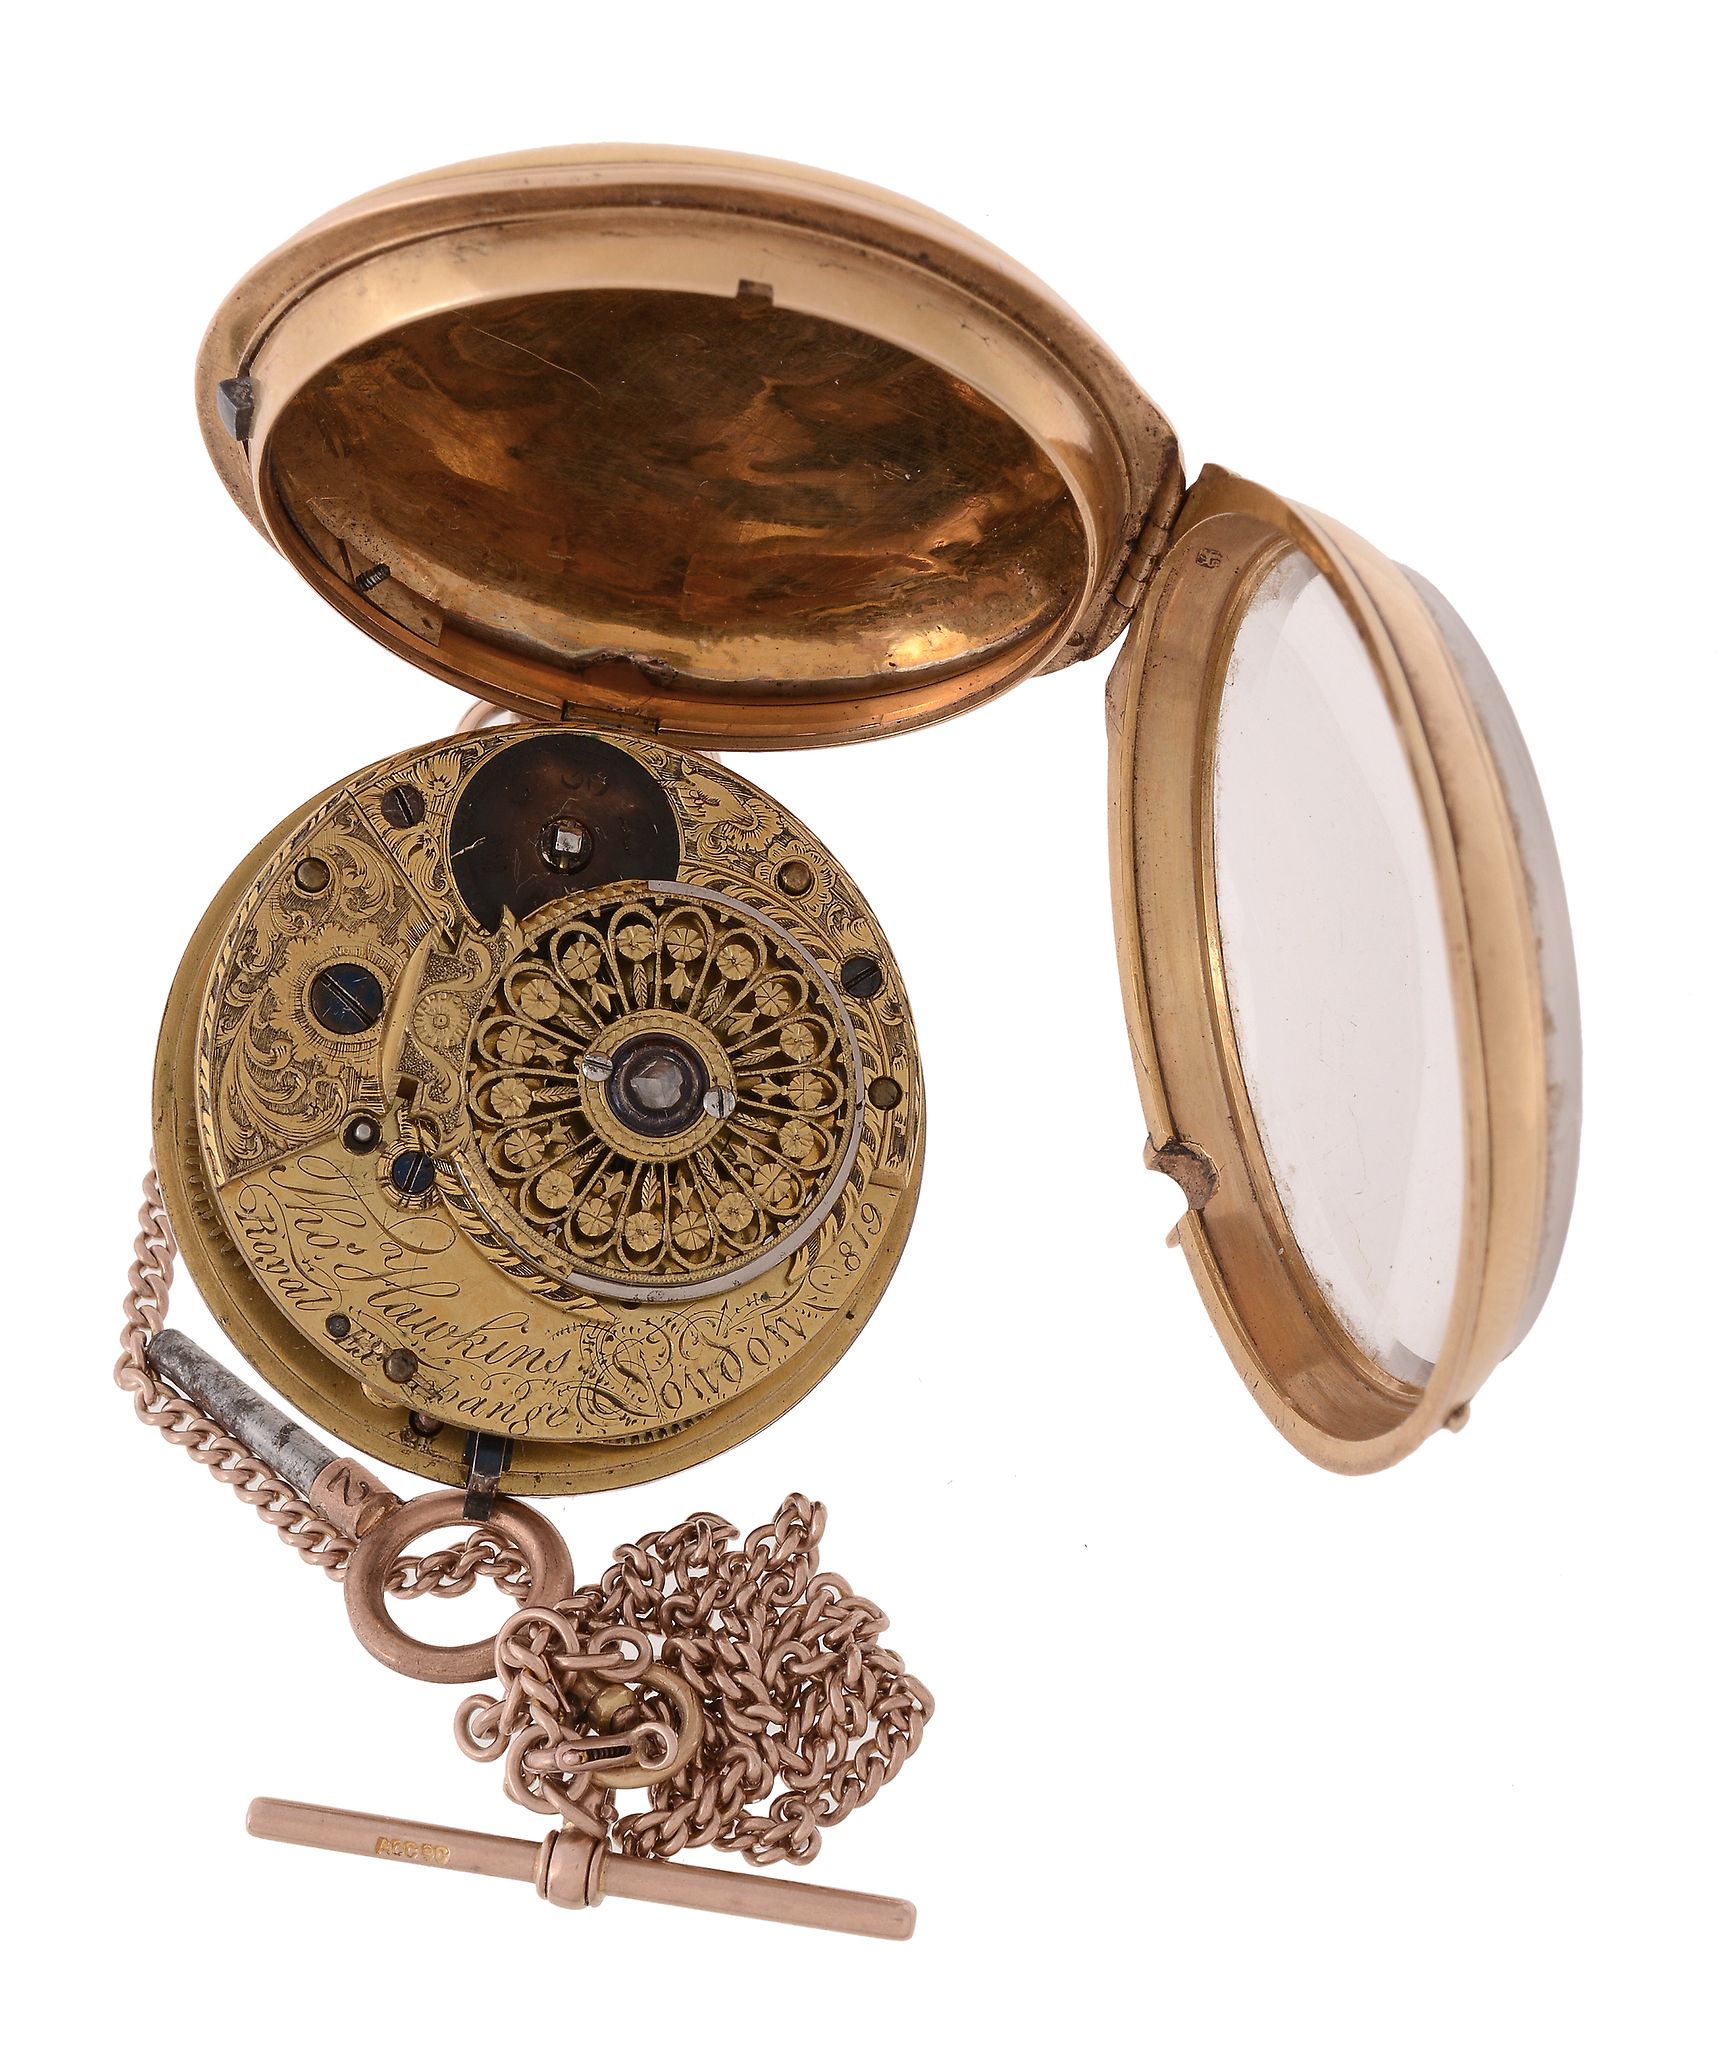 Thomas Hawkins, Royal Exchange London, a silver gilt open face pocket watch, no. 819, circa 1785, - Image 2 of 2